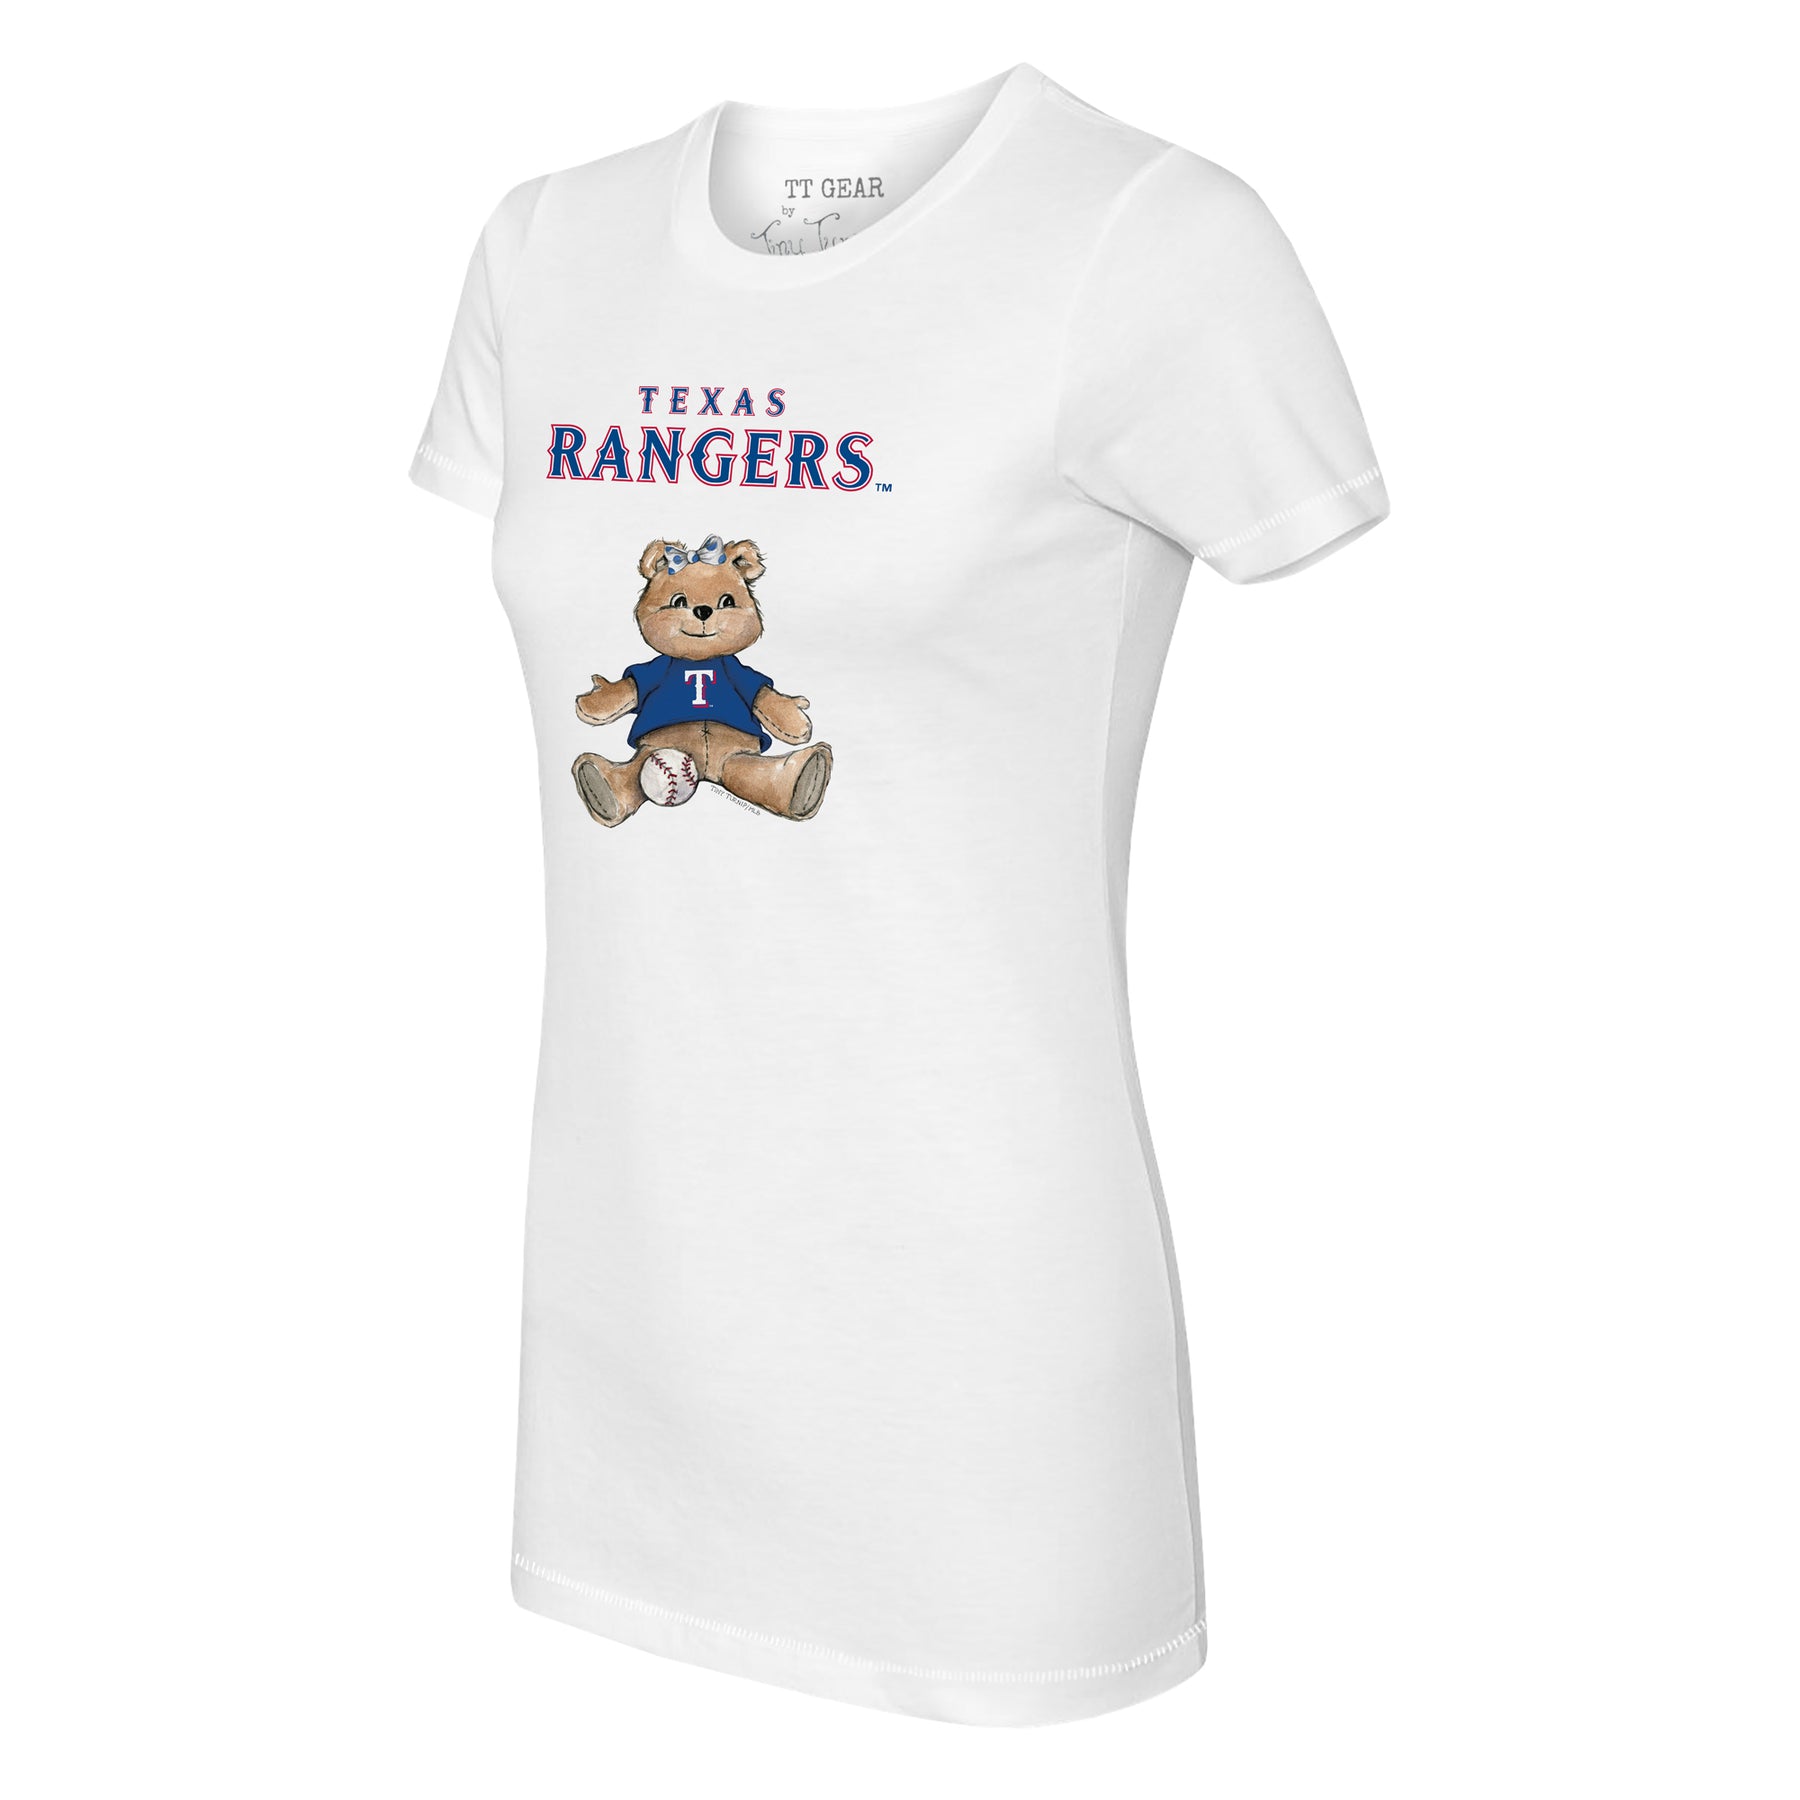 Youth Royal Texas Rangers Tie-Dye T-Shirt Size: Large